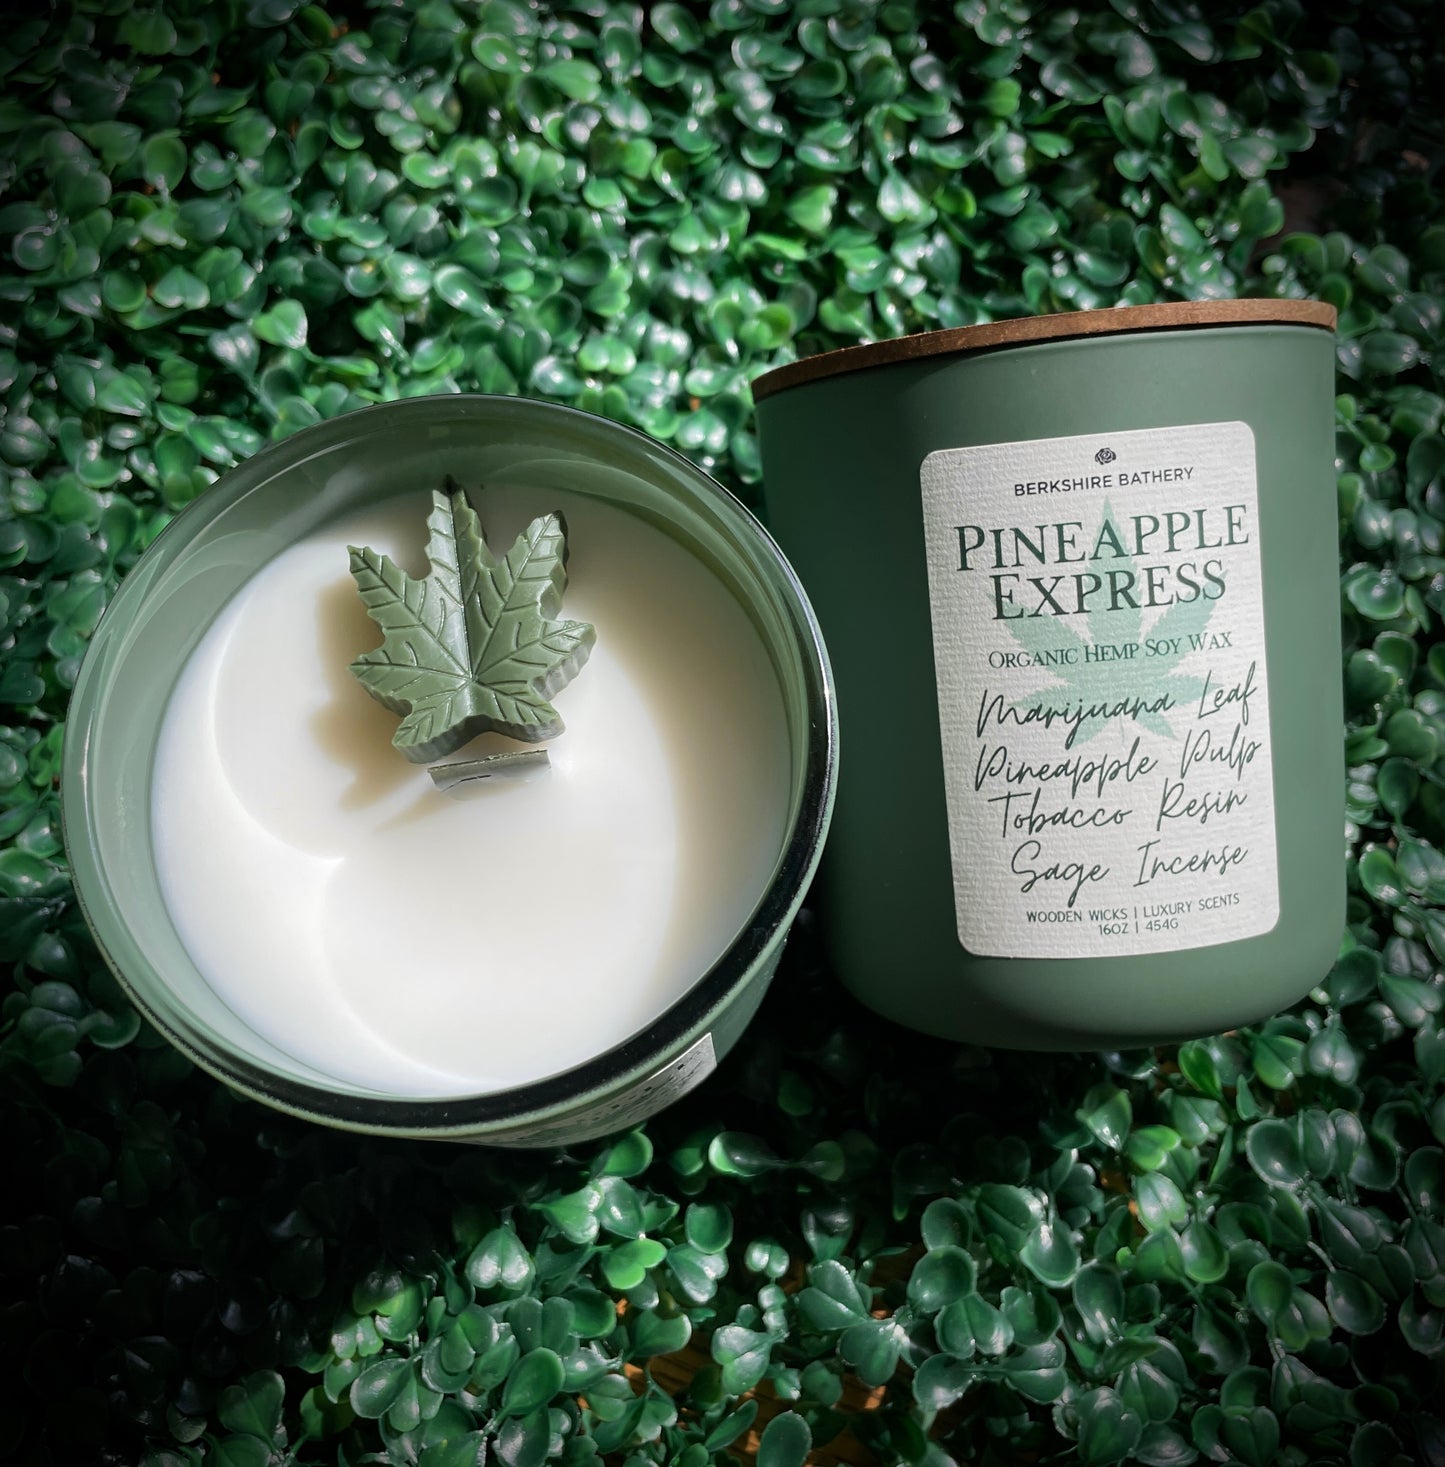 Pineapple Express | Organic HEMP Soy Wax - 16oz Wooden Wick Candle